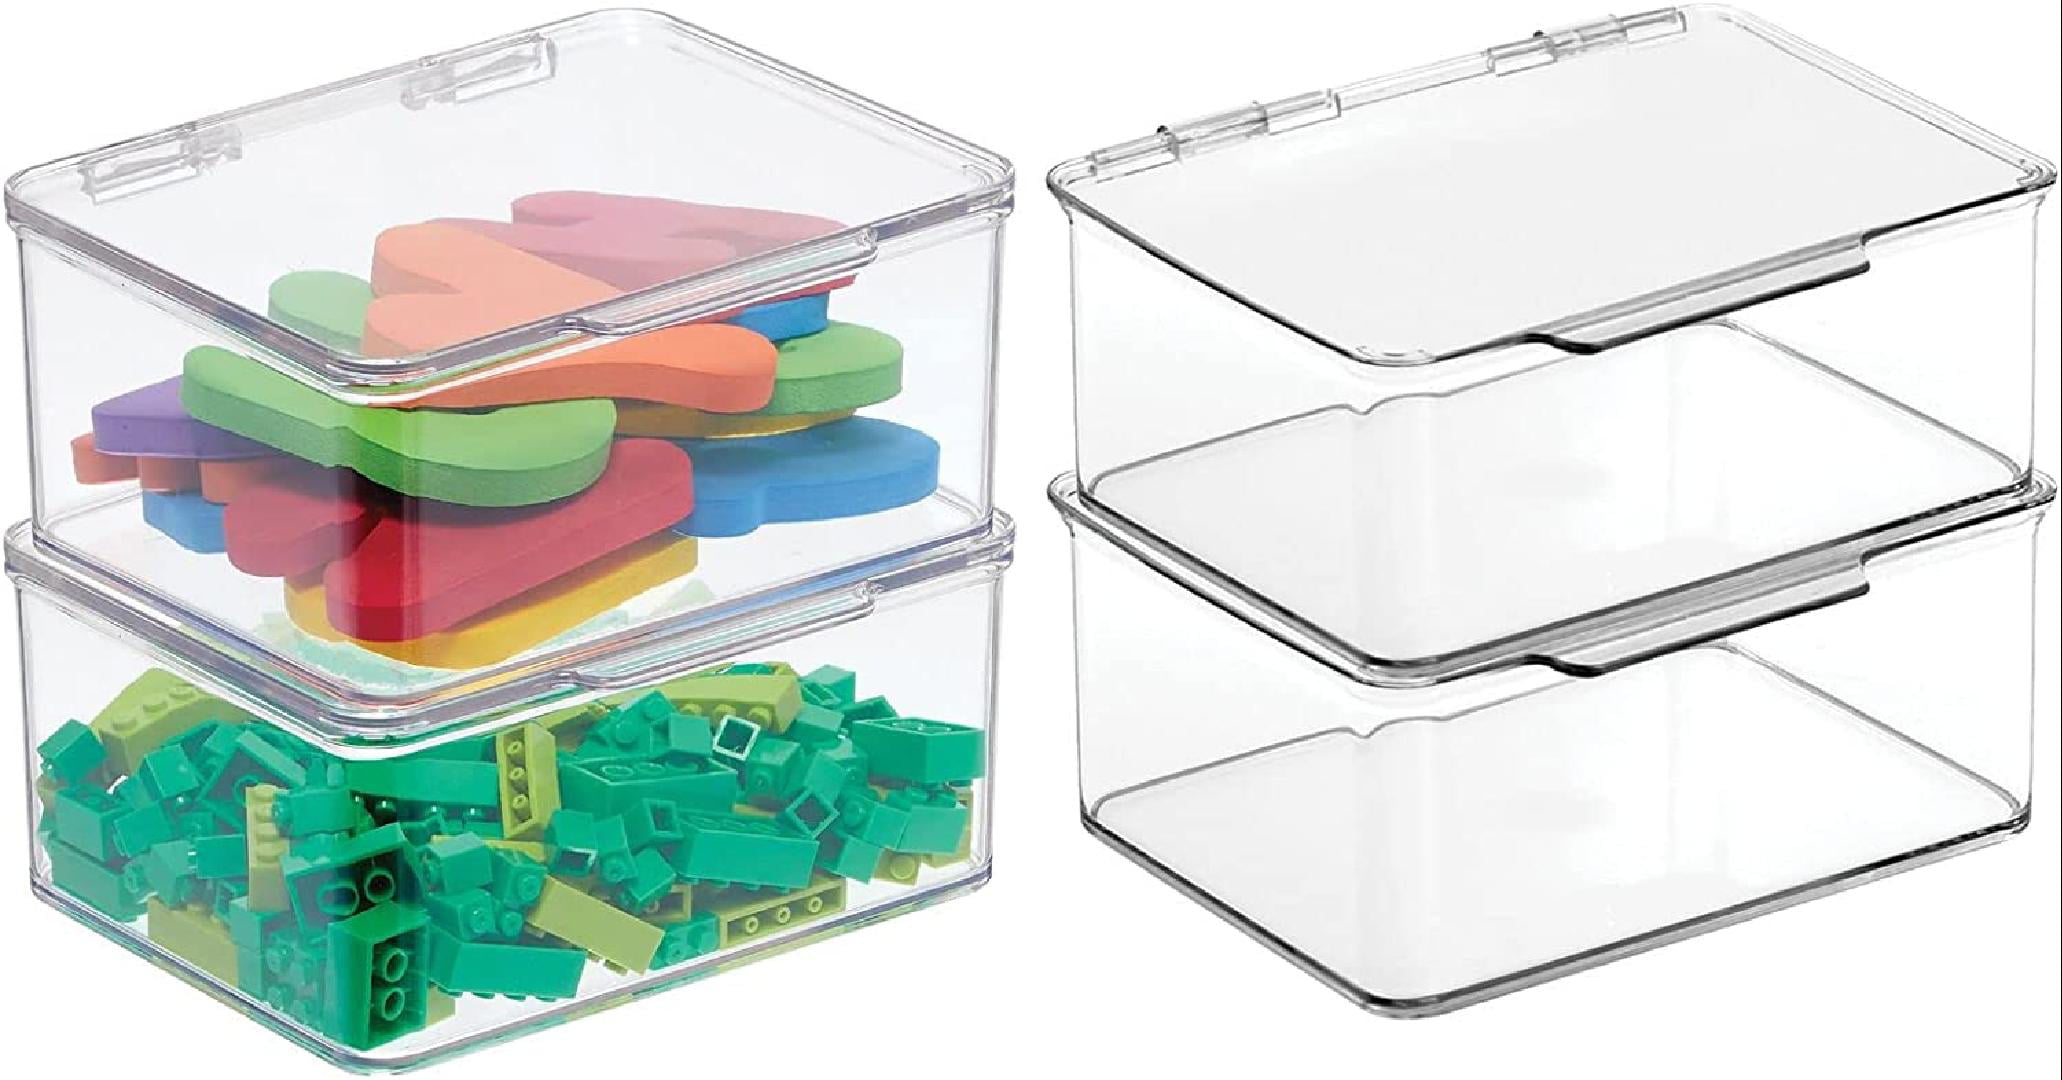 Yishyfier Plastic Storage Baskets Bins Boxes With Lids,Organizing Container  White Storage Organizer Bins For Shelves Drawers Desktop Playroom